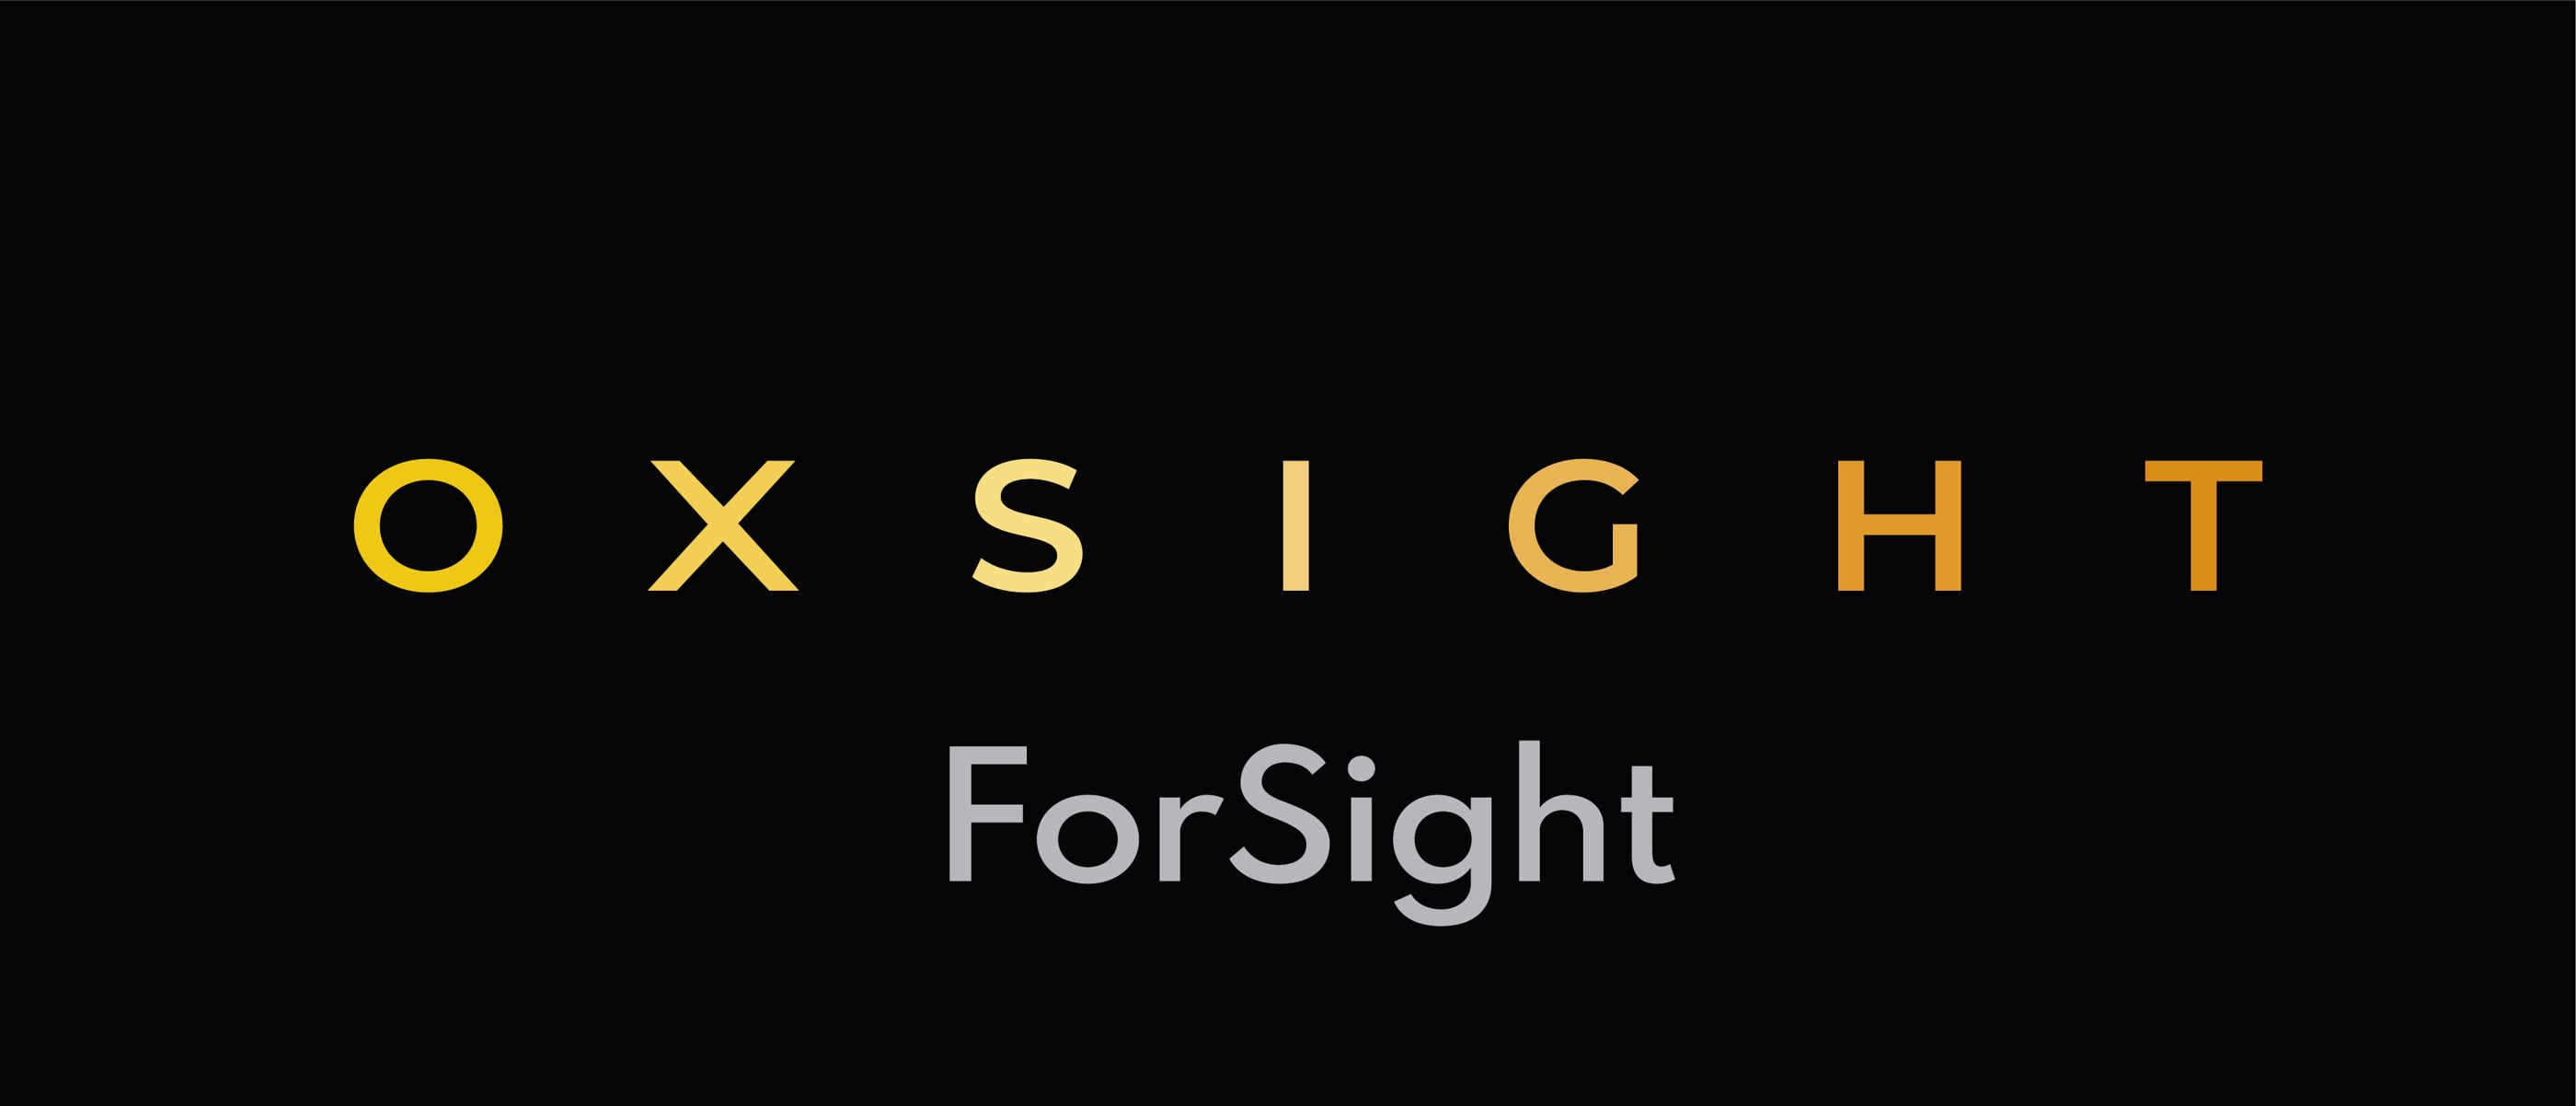 OXSIGHT ForSight logo